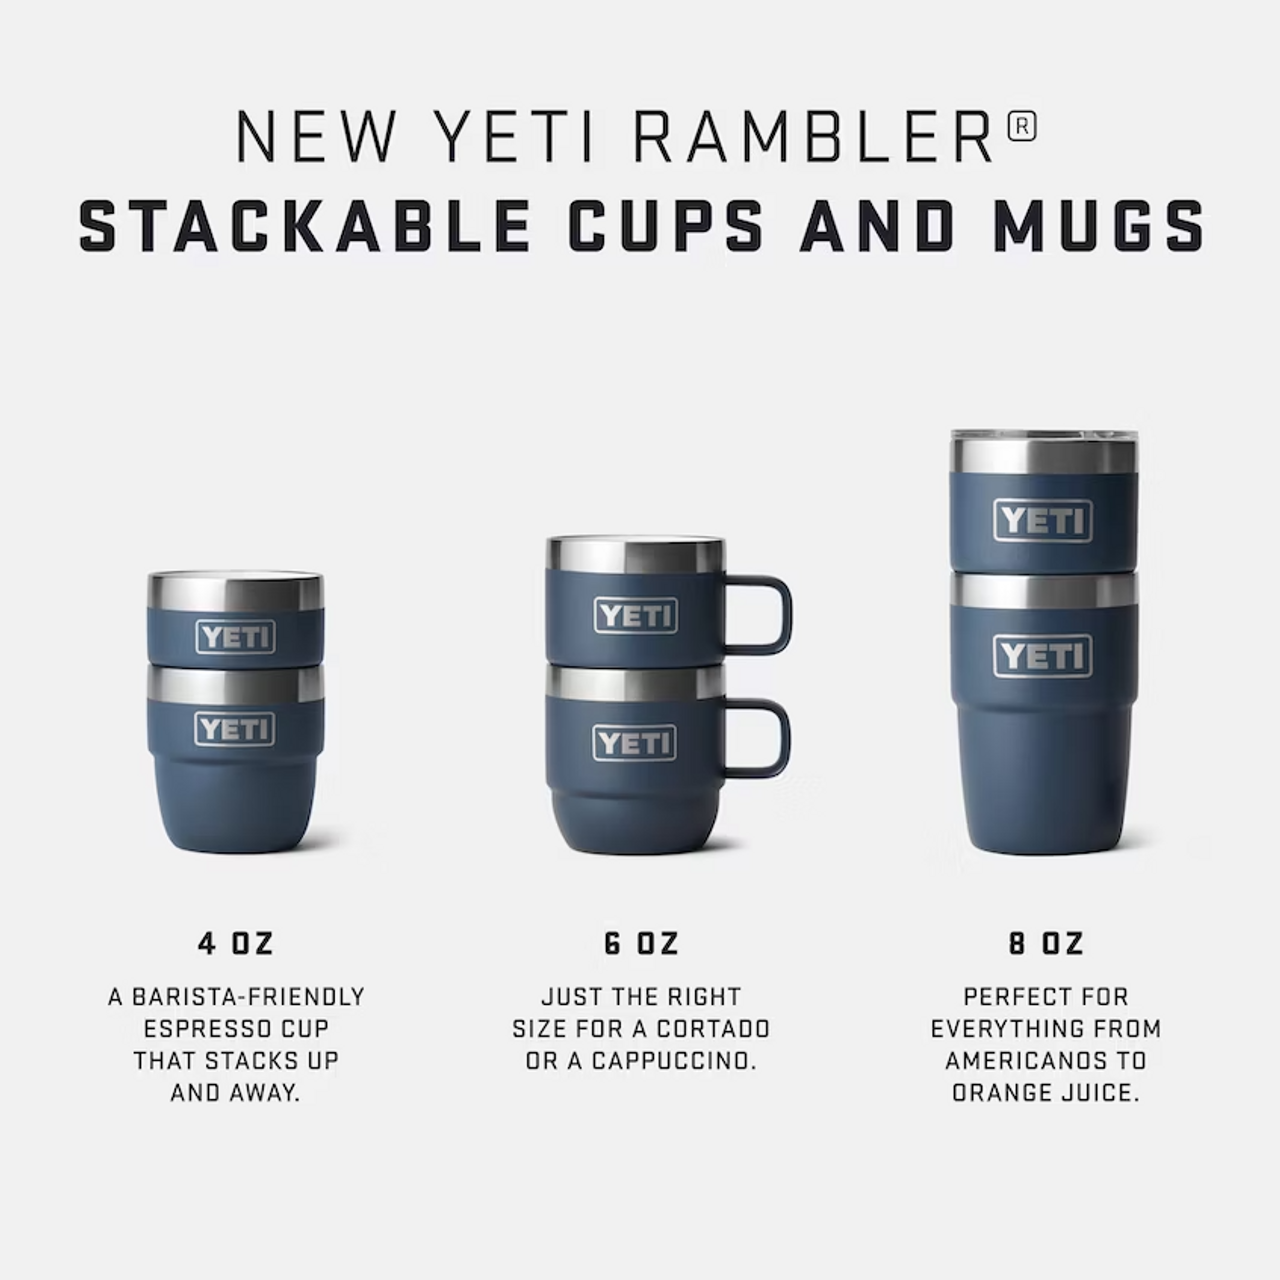 YETI Rambler 4 oz Espresso Cup - 2 Pack